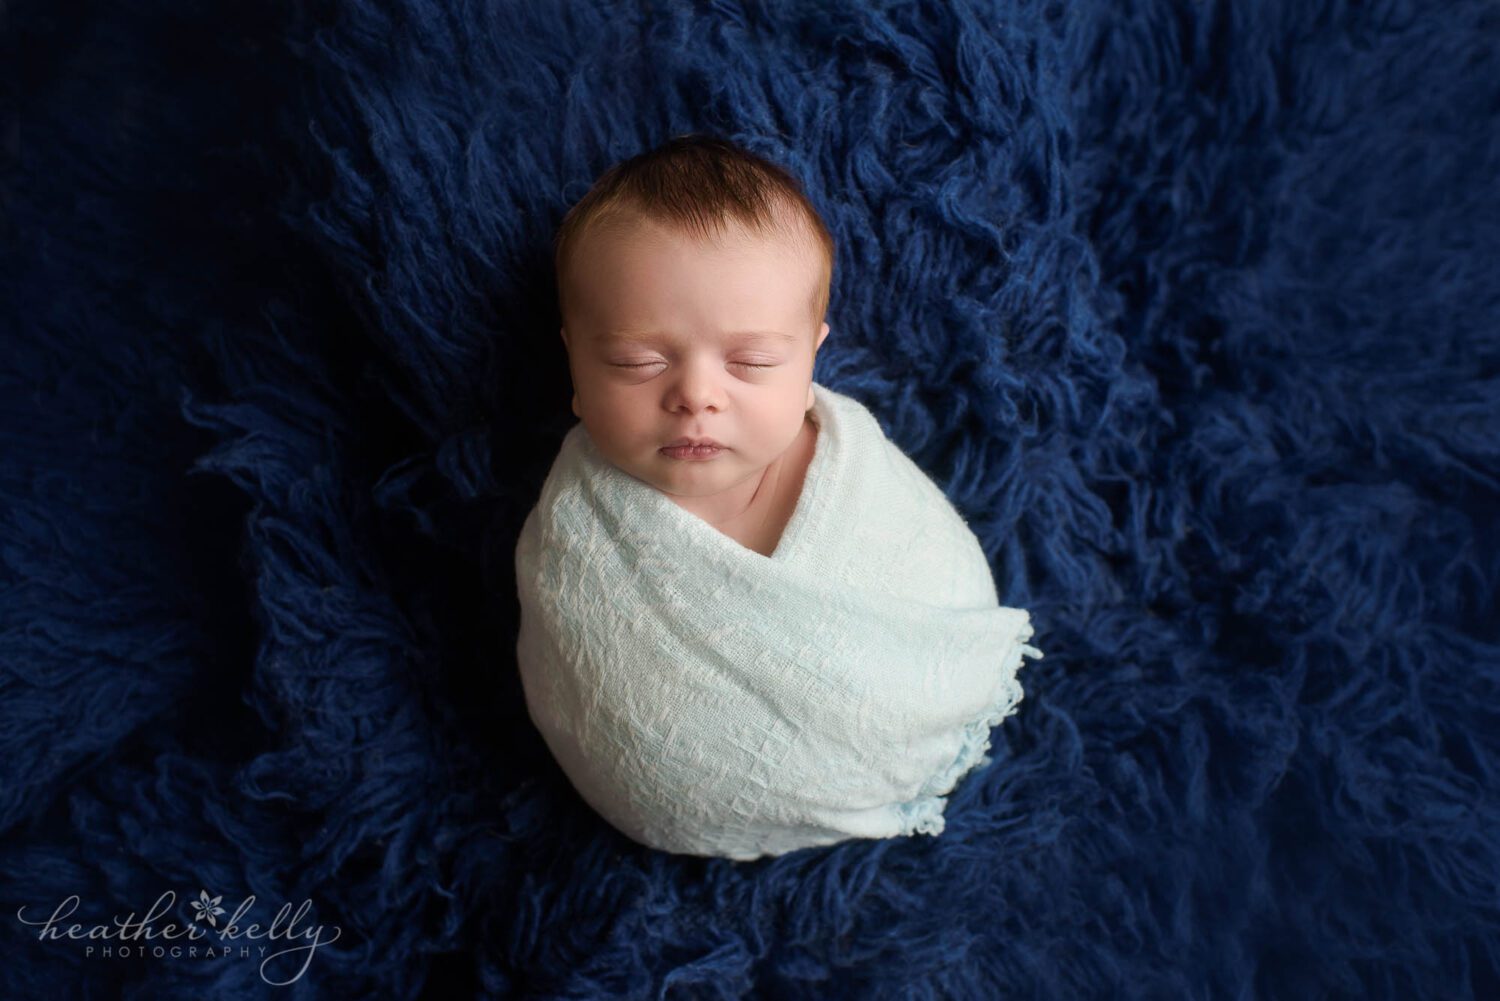 new milford newborn photos

newborn boy wrapped in dad's childhood blanket